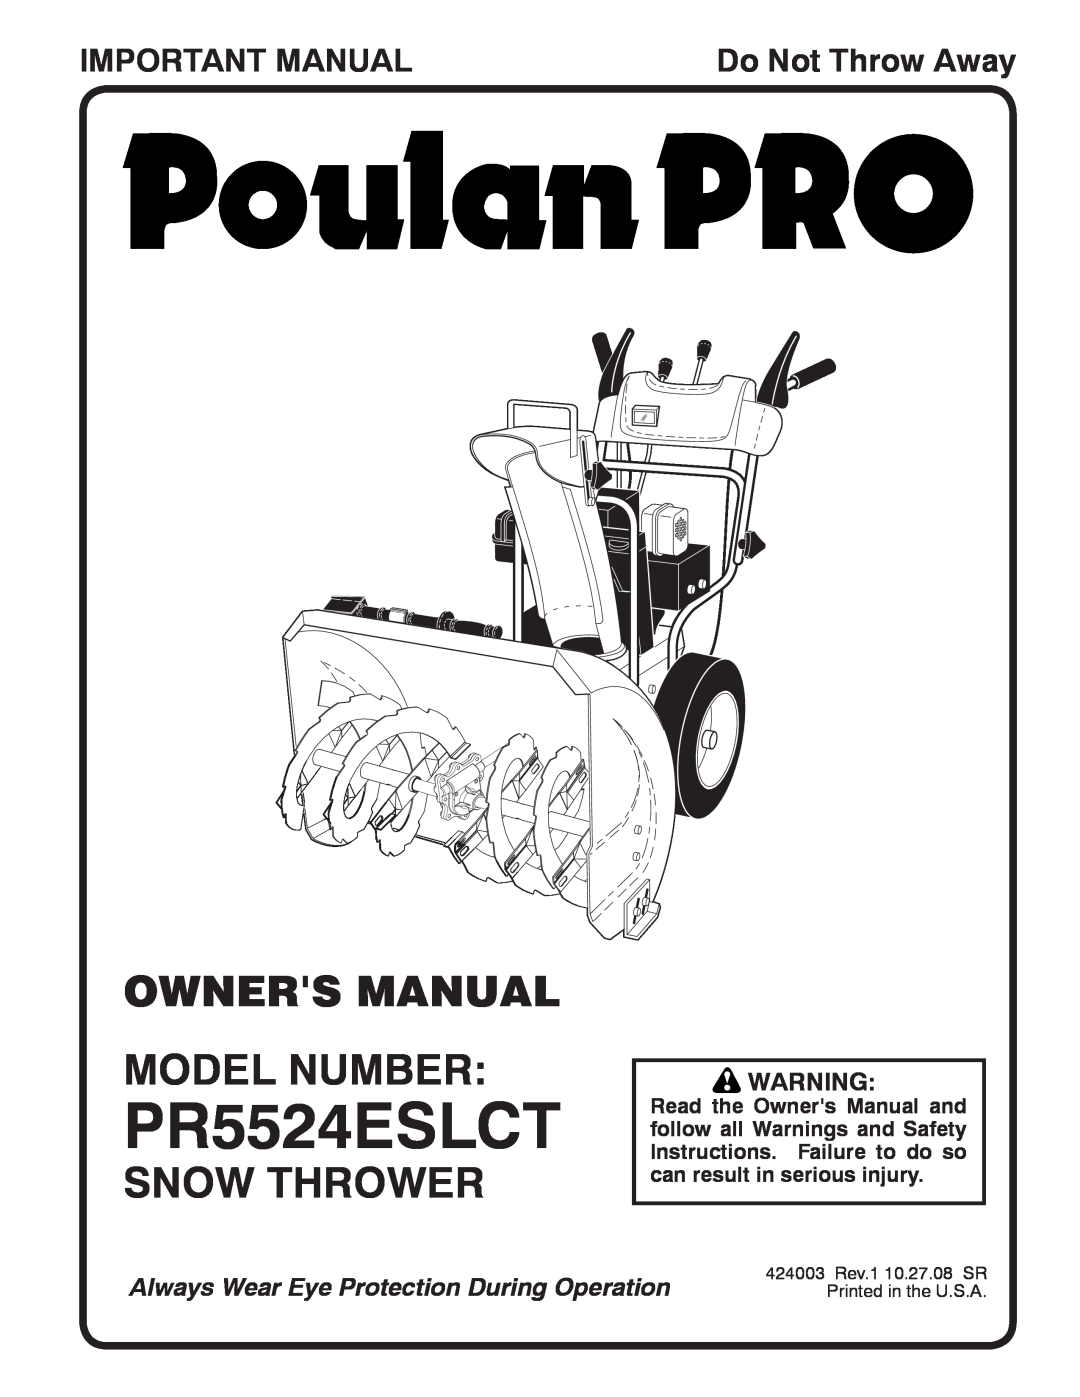 Poulan 424003 owner manual Snow Thrower, Important Manual, PR5524ESLCT, Do Not Throw Away 